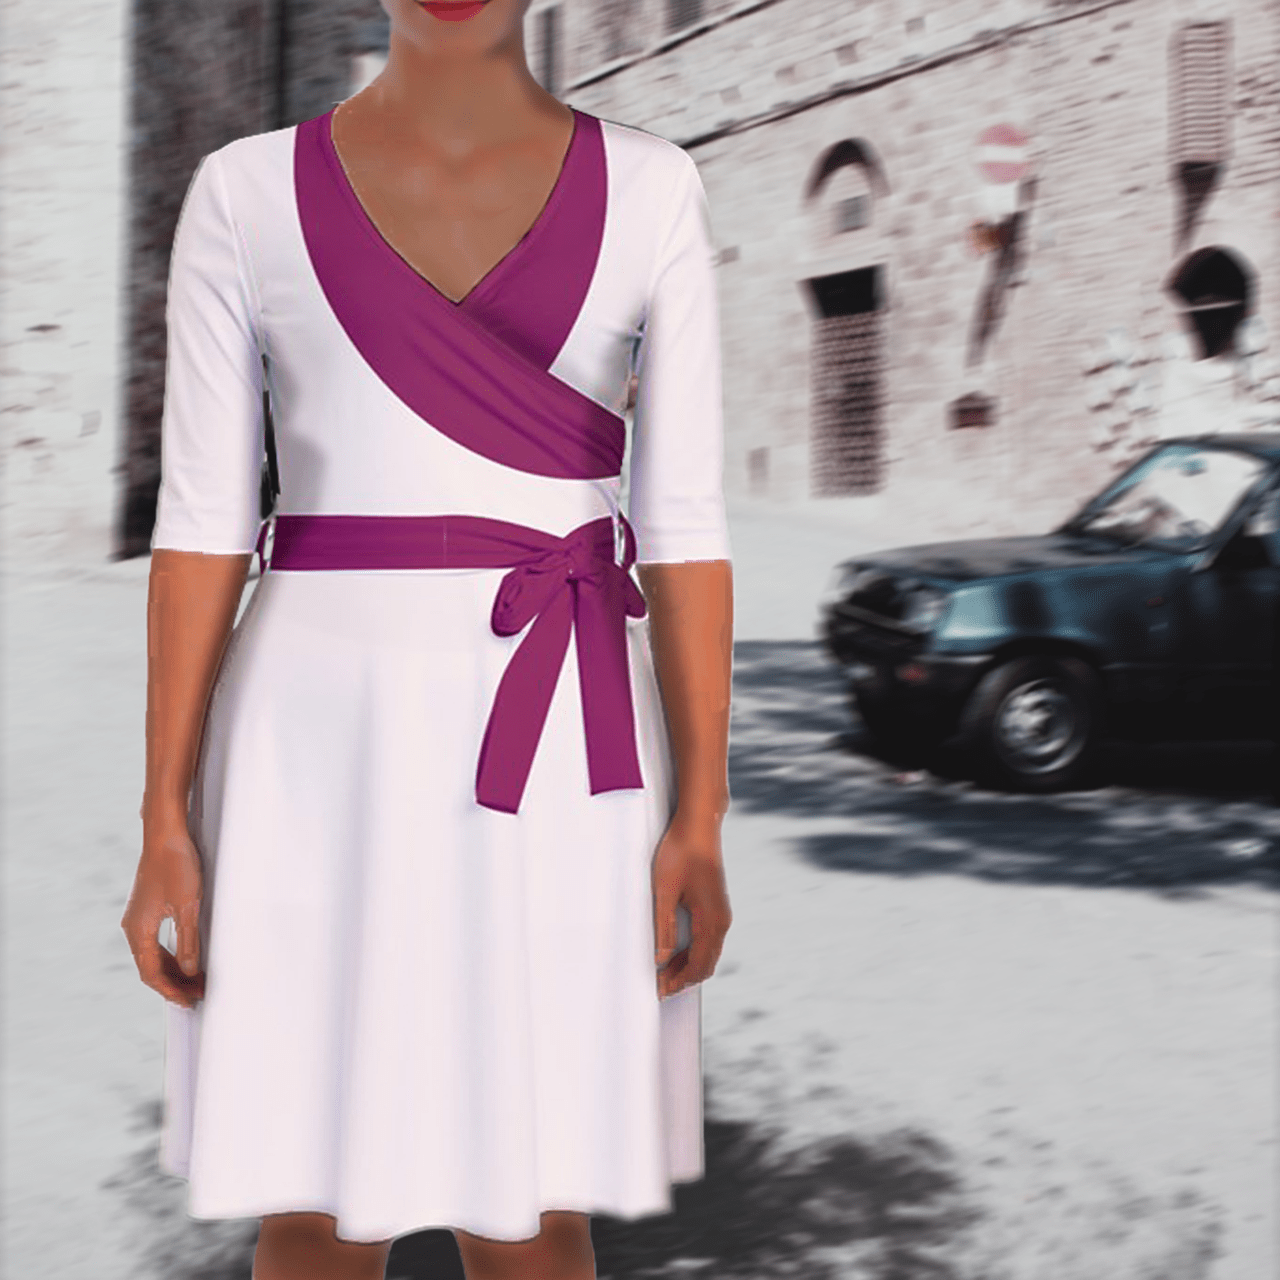 the-wheaten-store-women-s-retro-wrap-up-cocktail-dress-light-pink-fuchsia-dresses-33085781115077